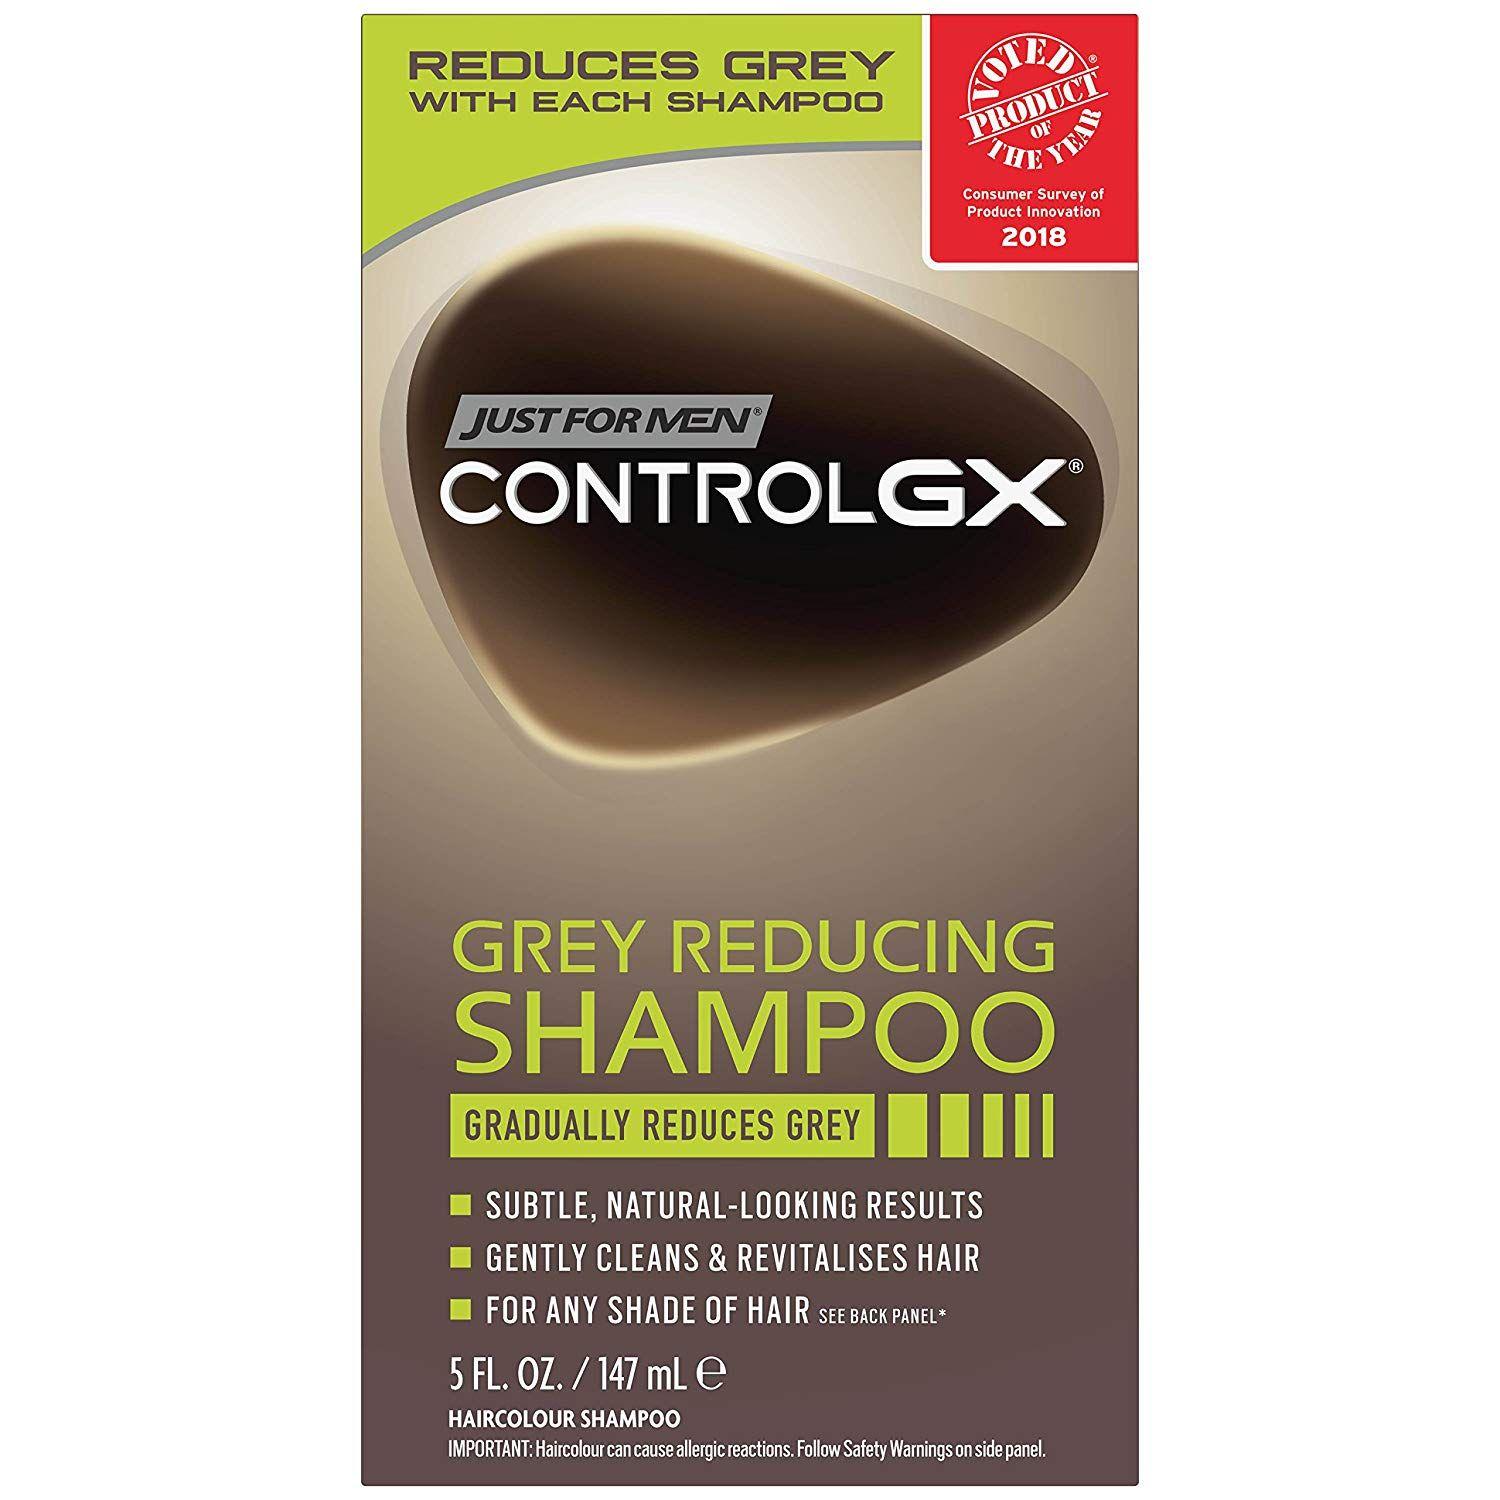 Shampoo with Back Logo - Just For Men Control GX Grey Reducing Shampoo, 5 Fluid Ounce: Amazon